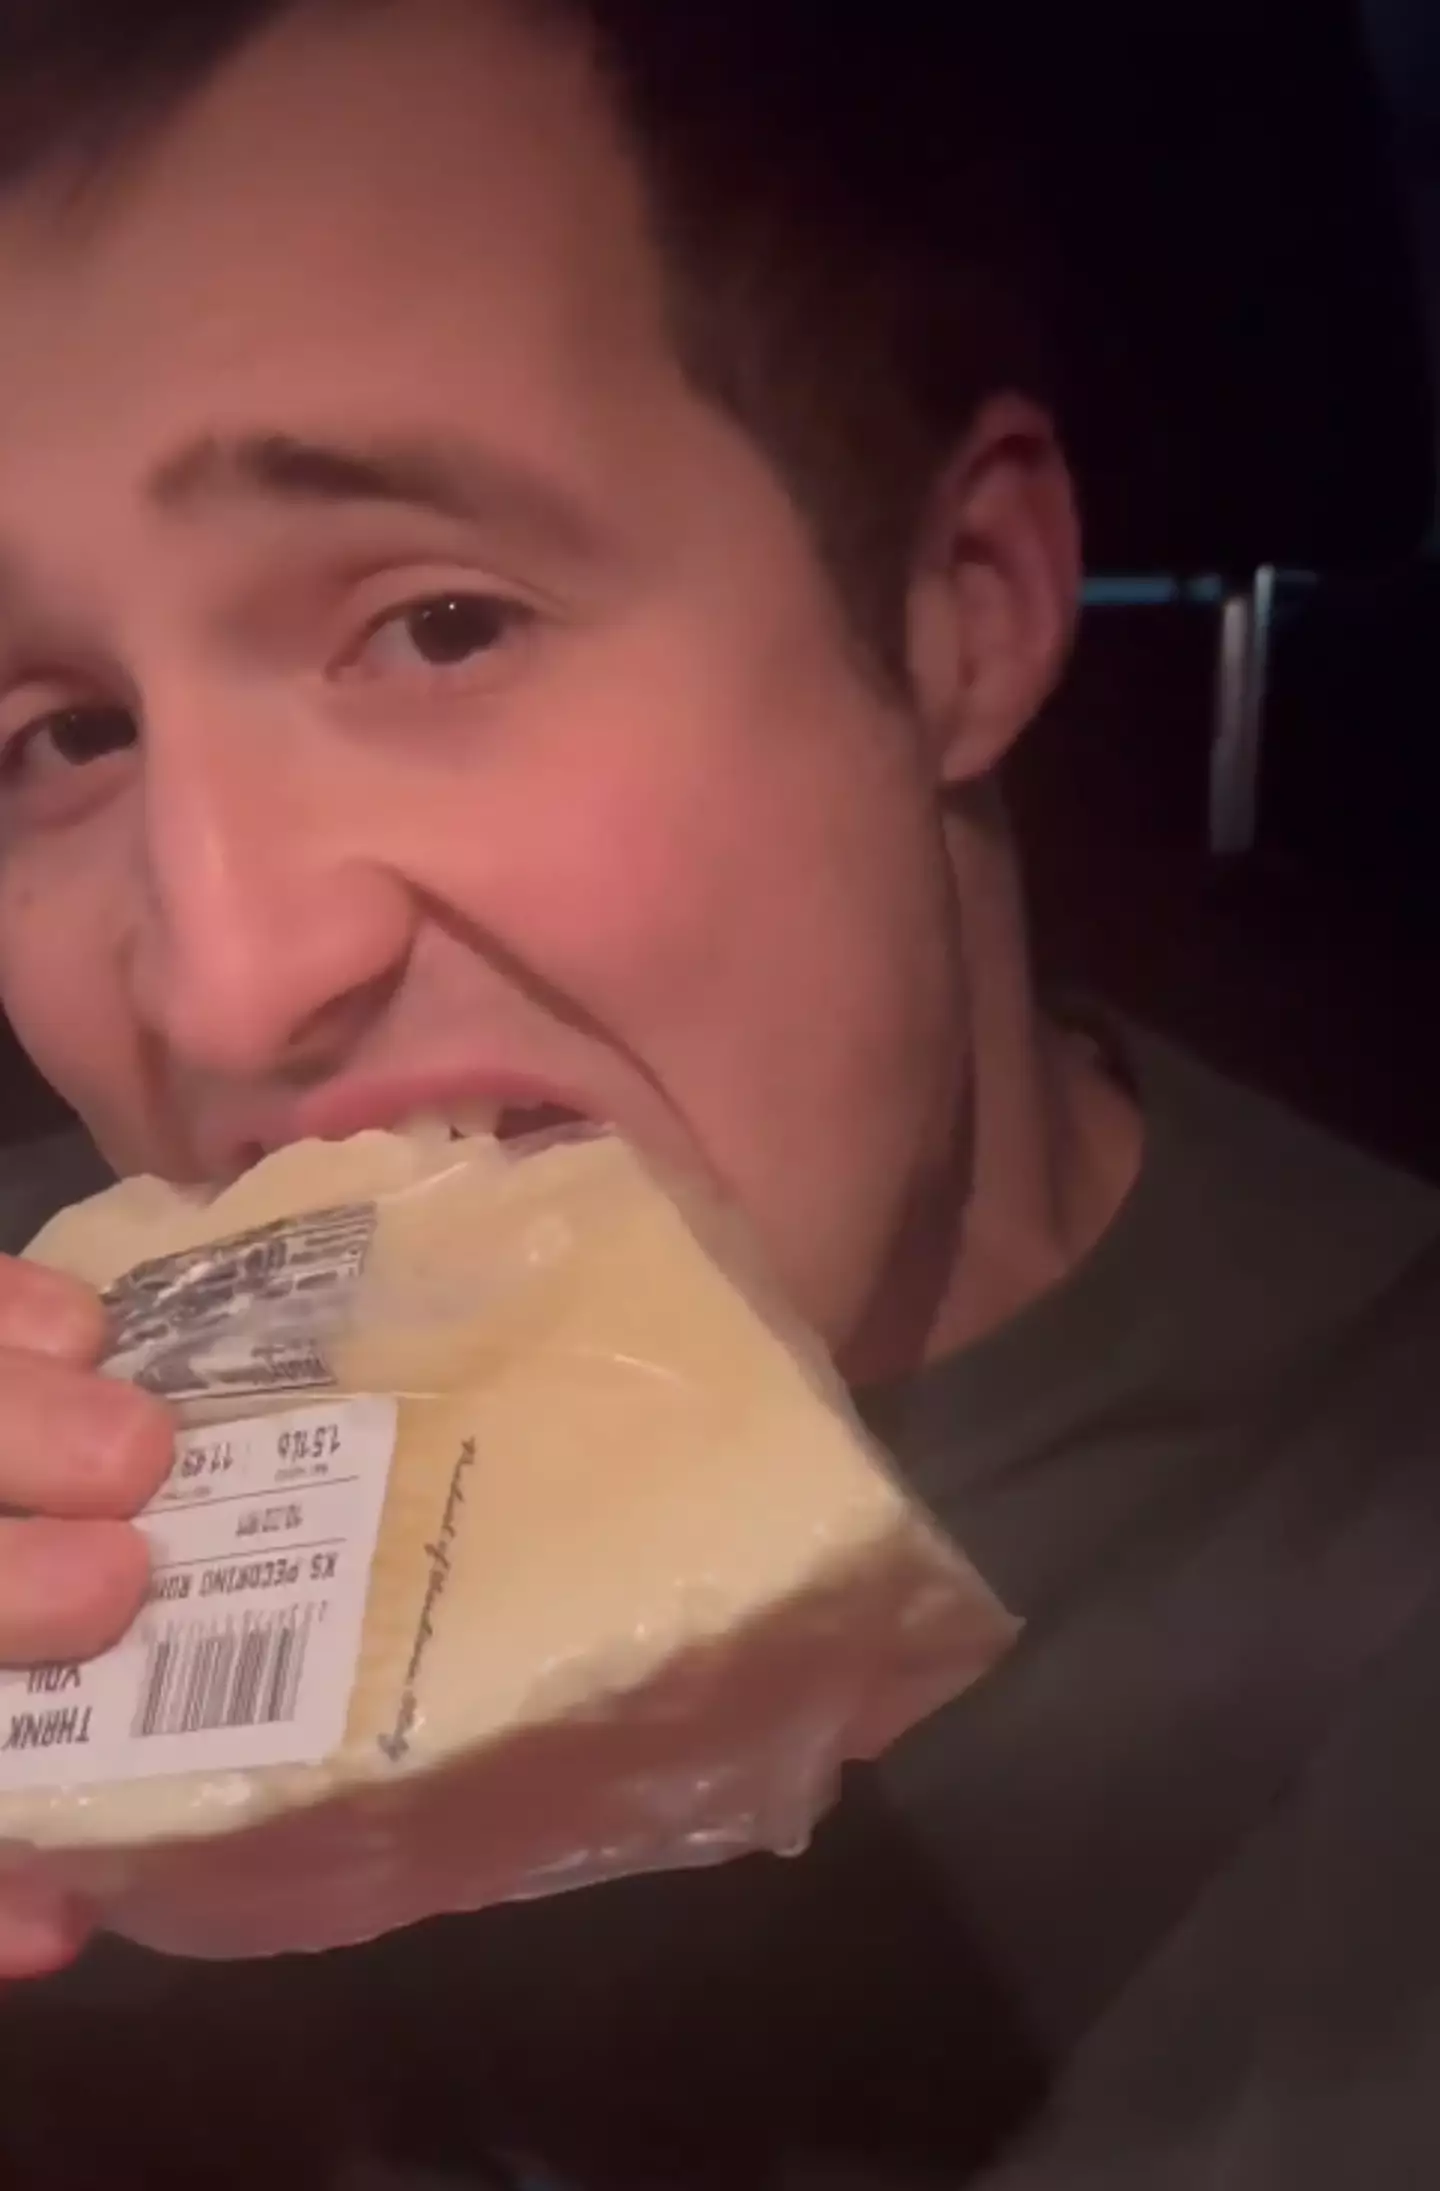 A man's secret cheese habit has horrifed many.